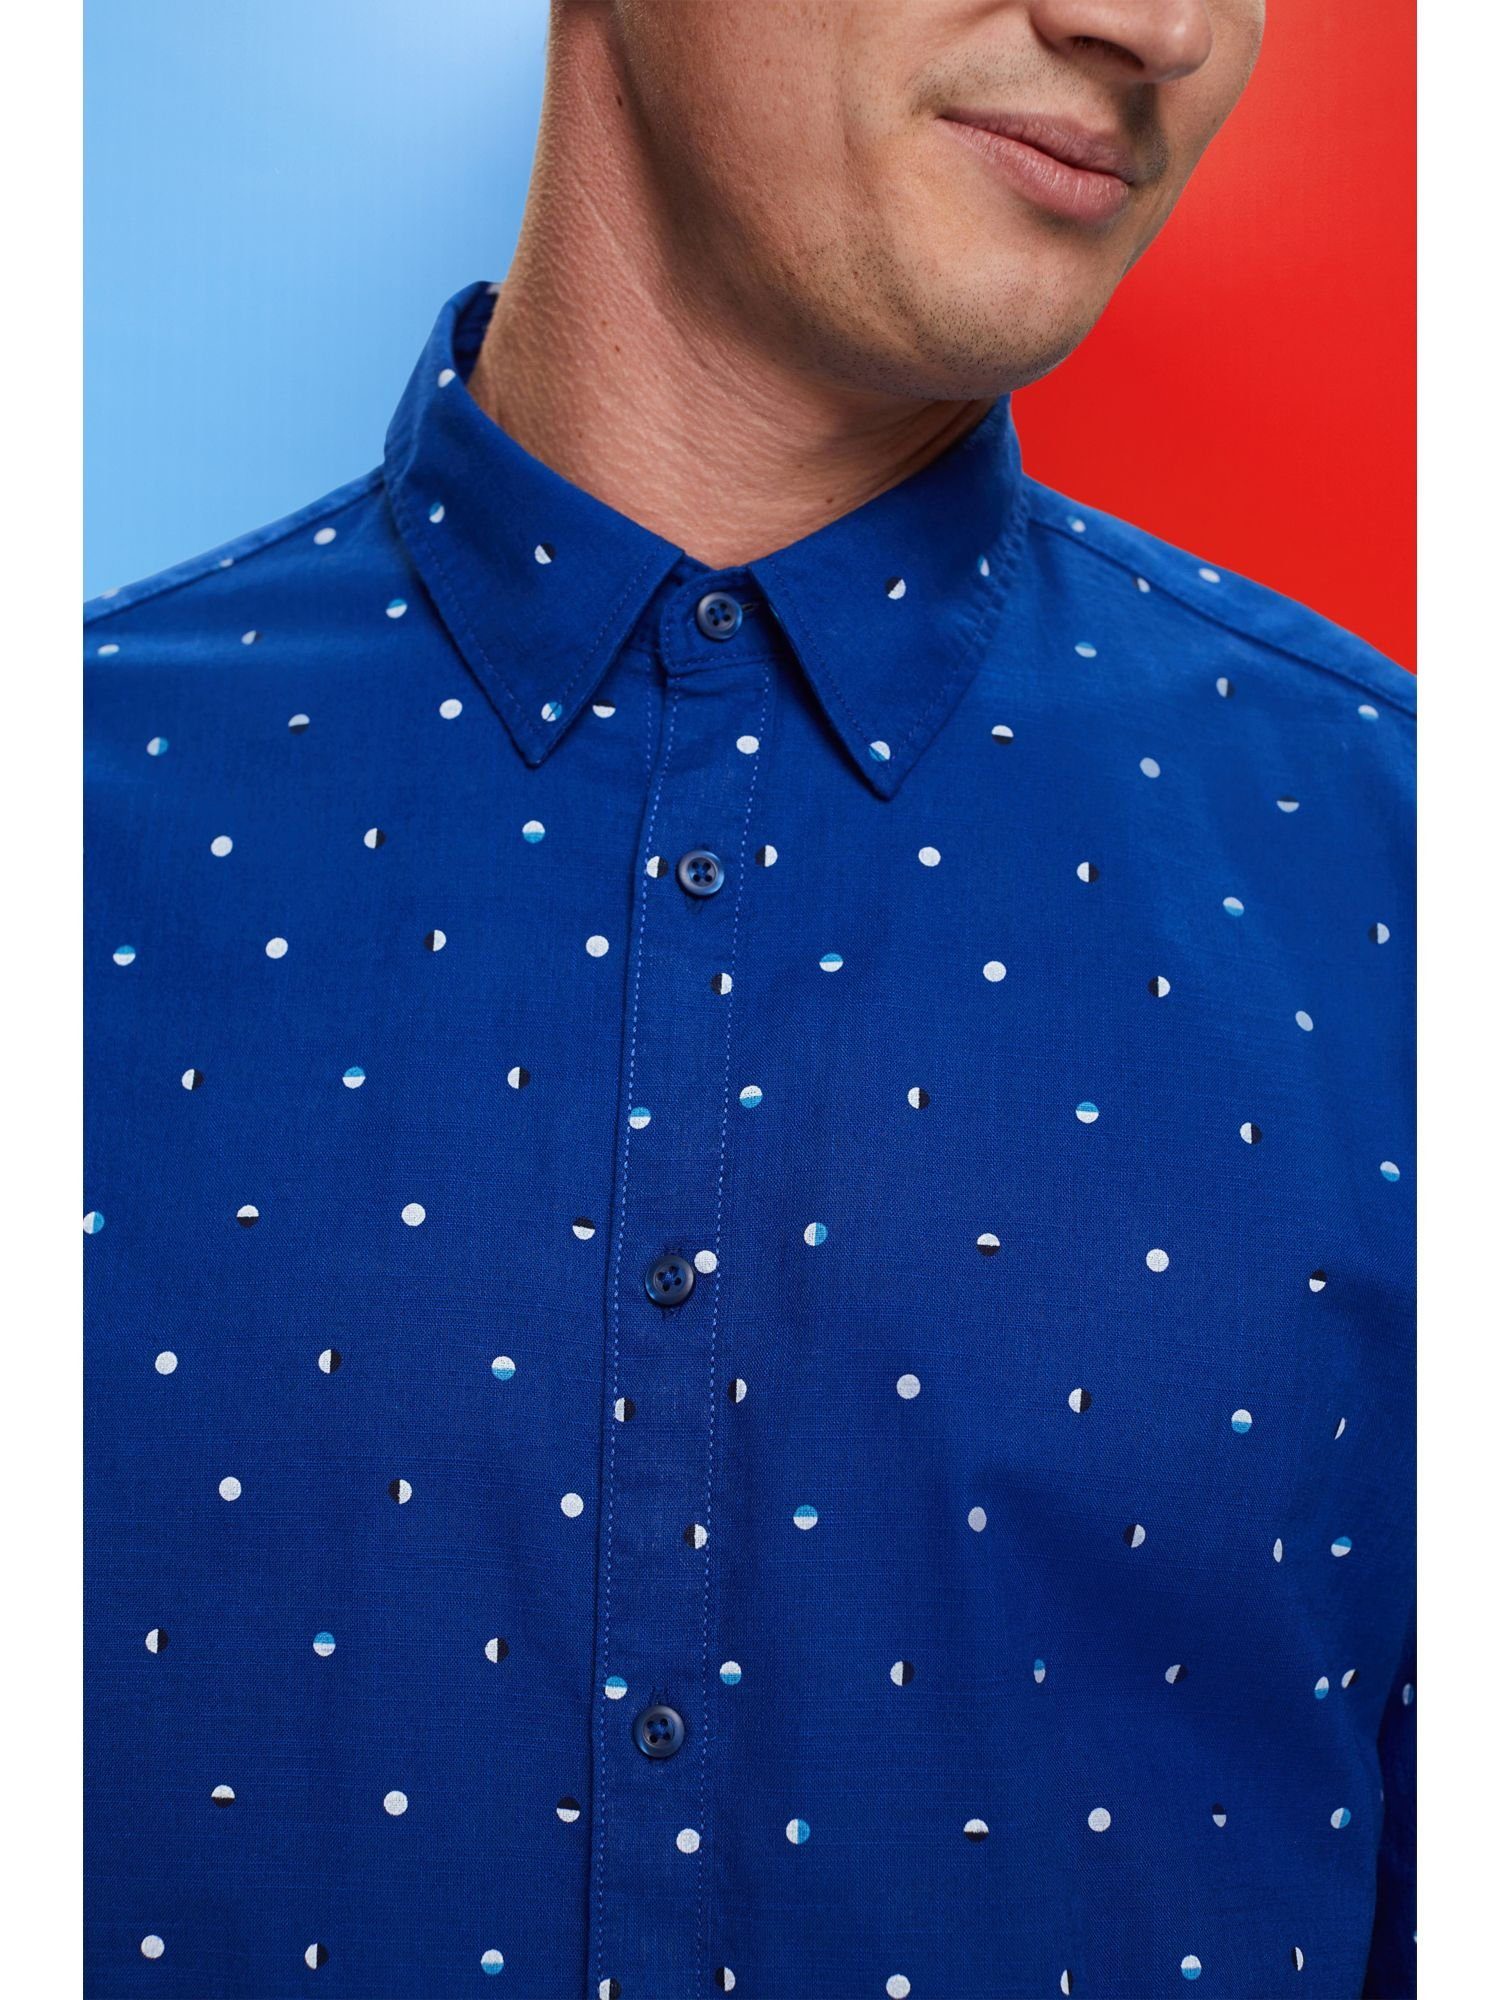 Lunar-Dot-Muster mit edc Langarmhemd by INK aus Hemd Baumwolle Esprit Slub